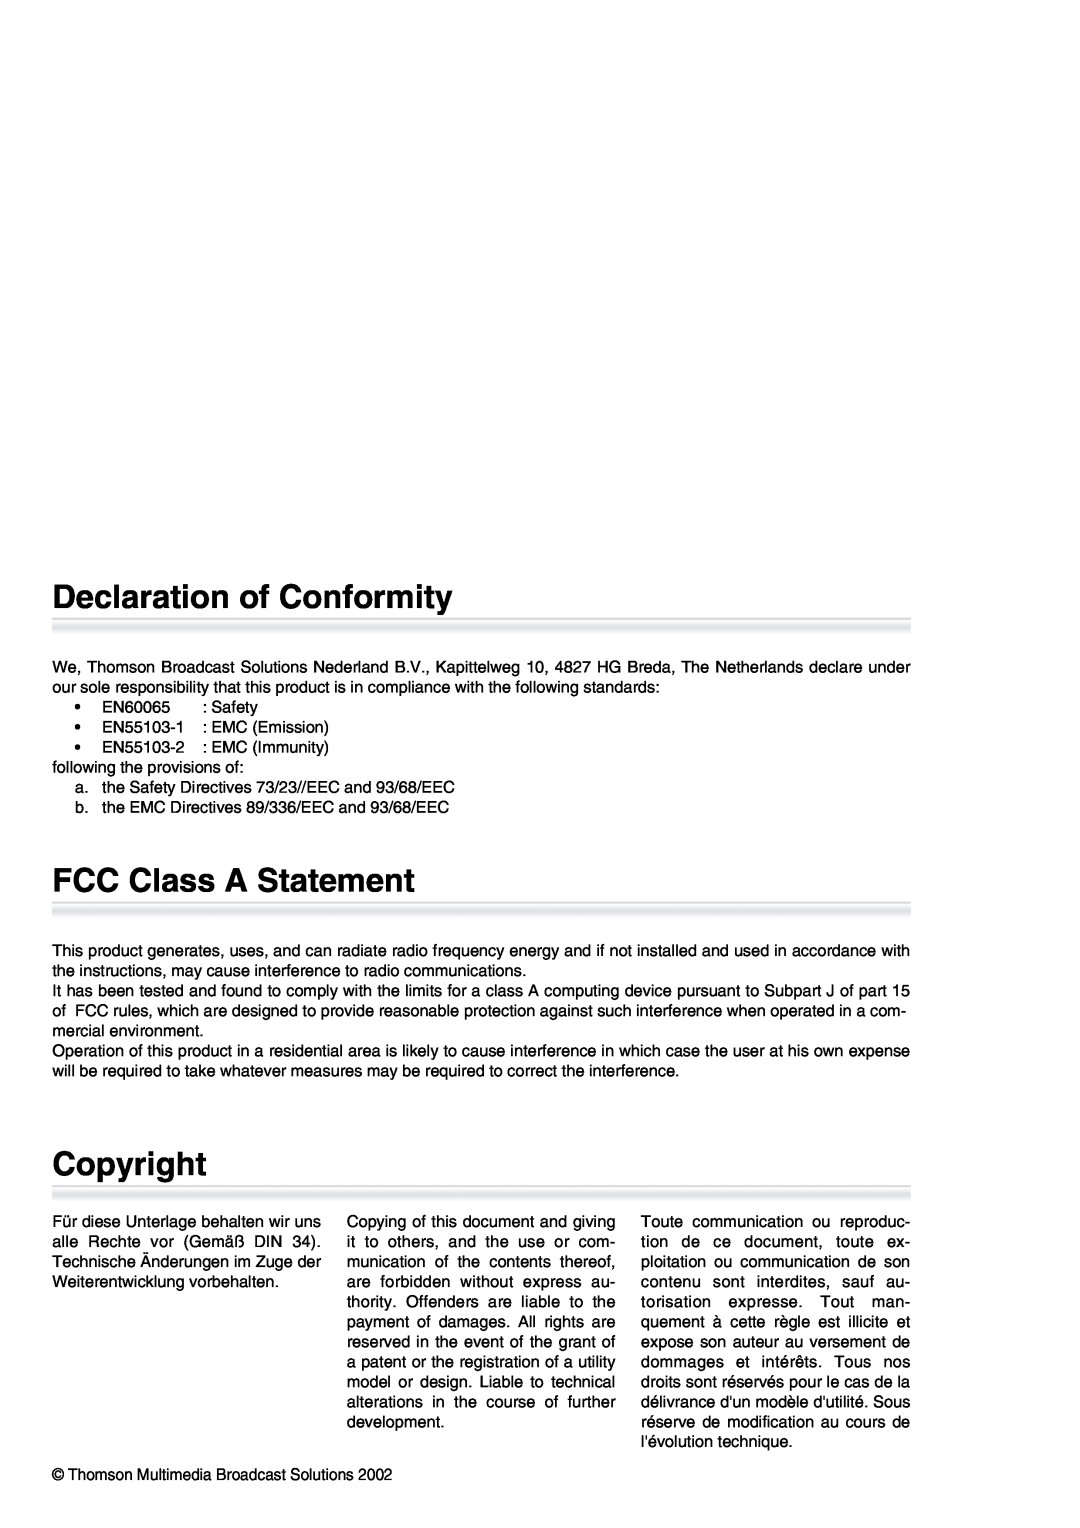 Technicolor - Thomson LDK 4482 manual Declaration of Conformity, FCC Class A Statement, Copyright 